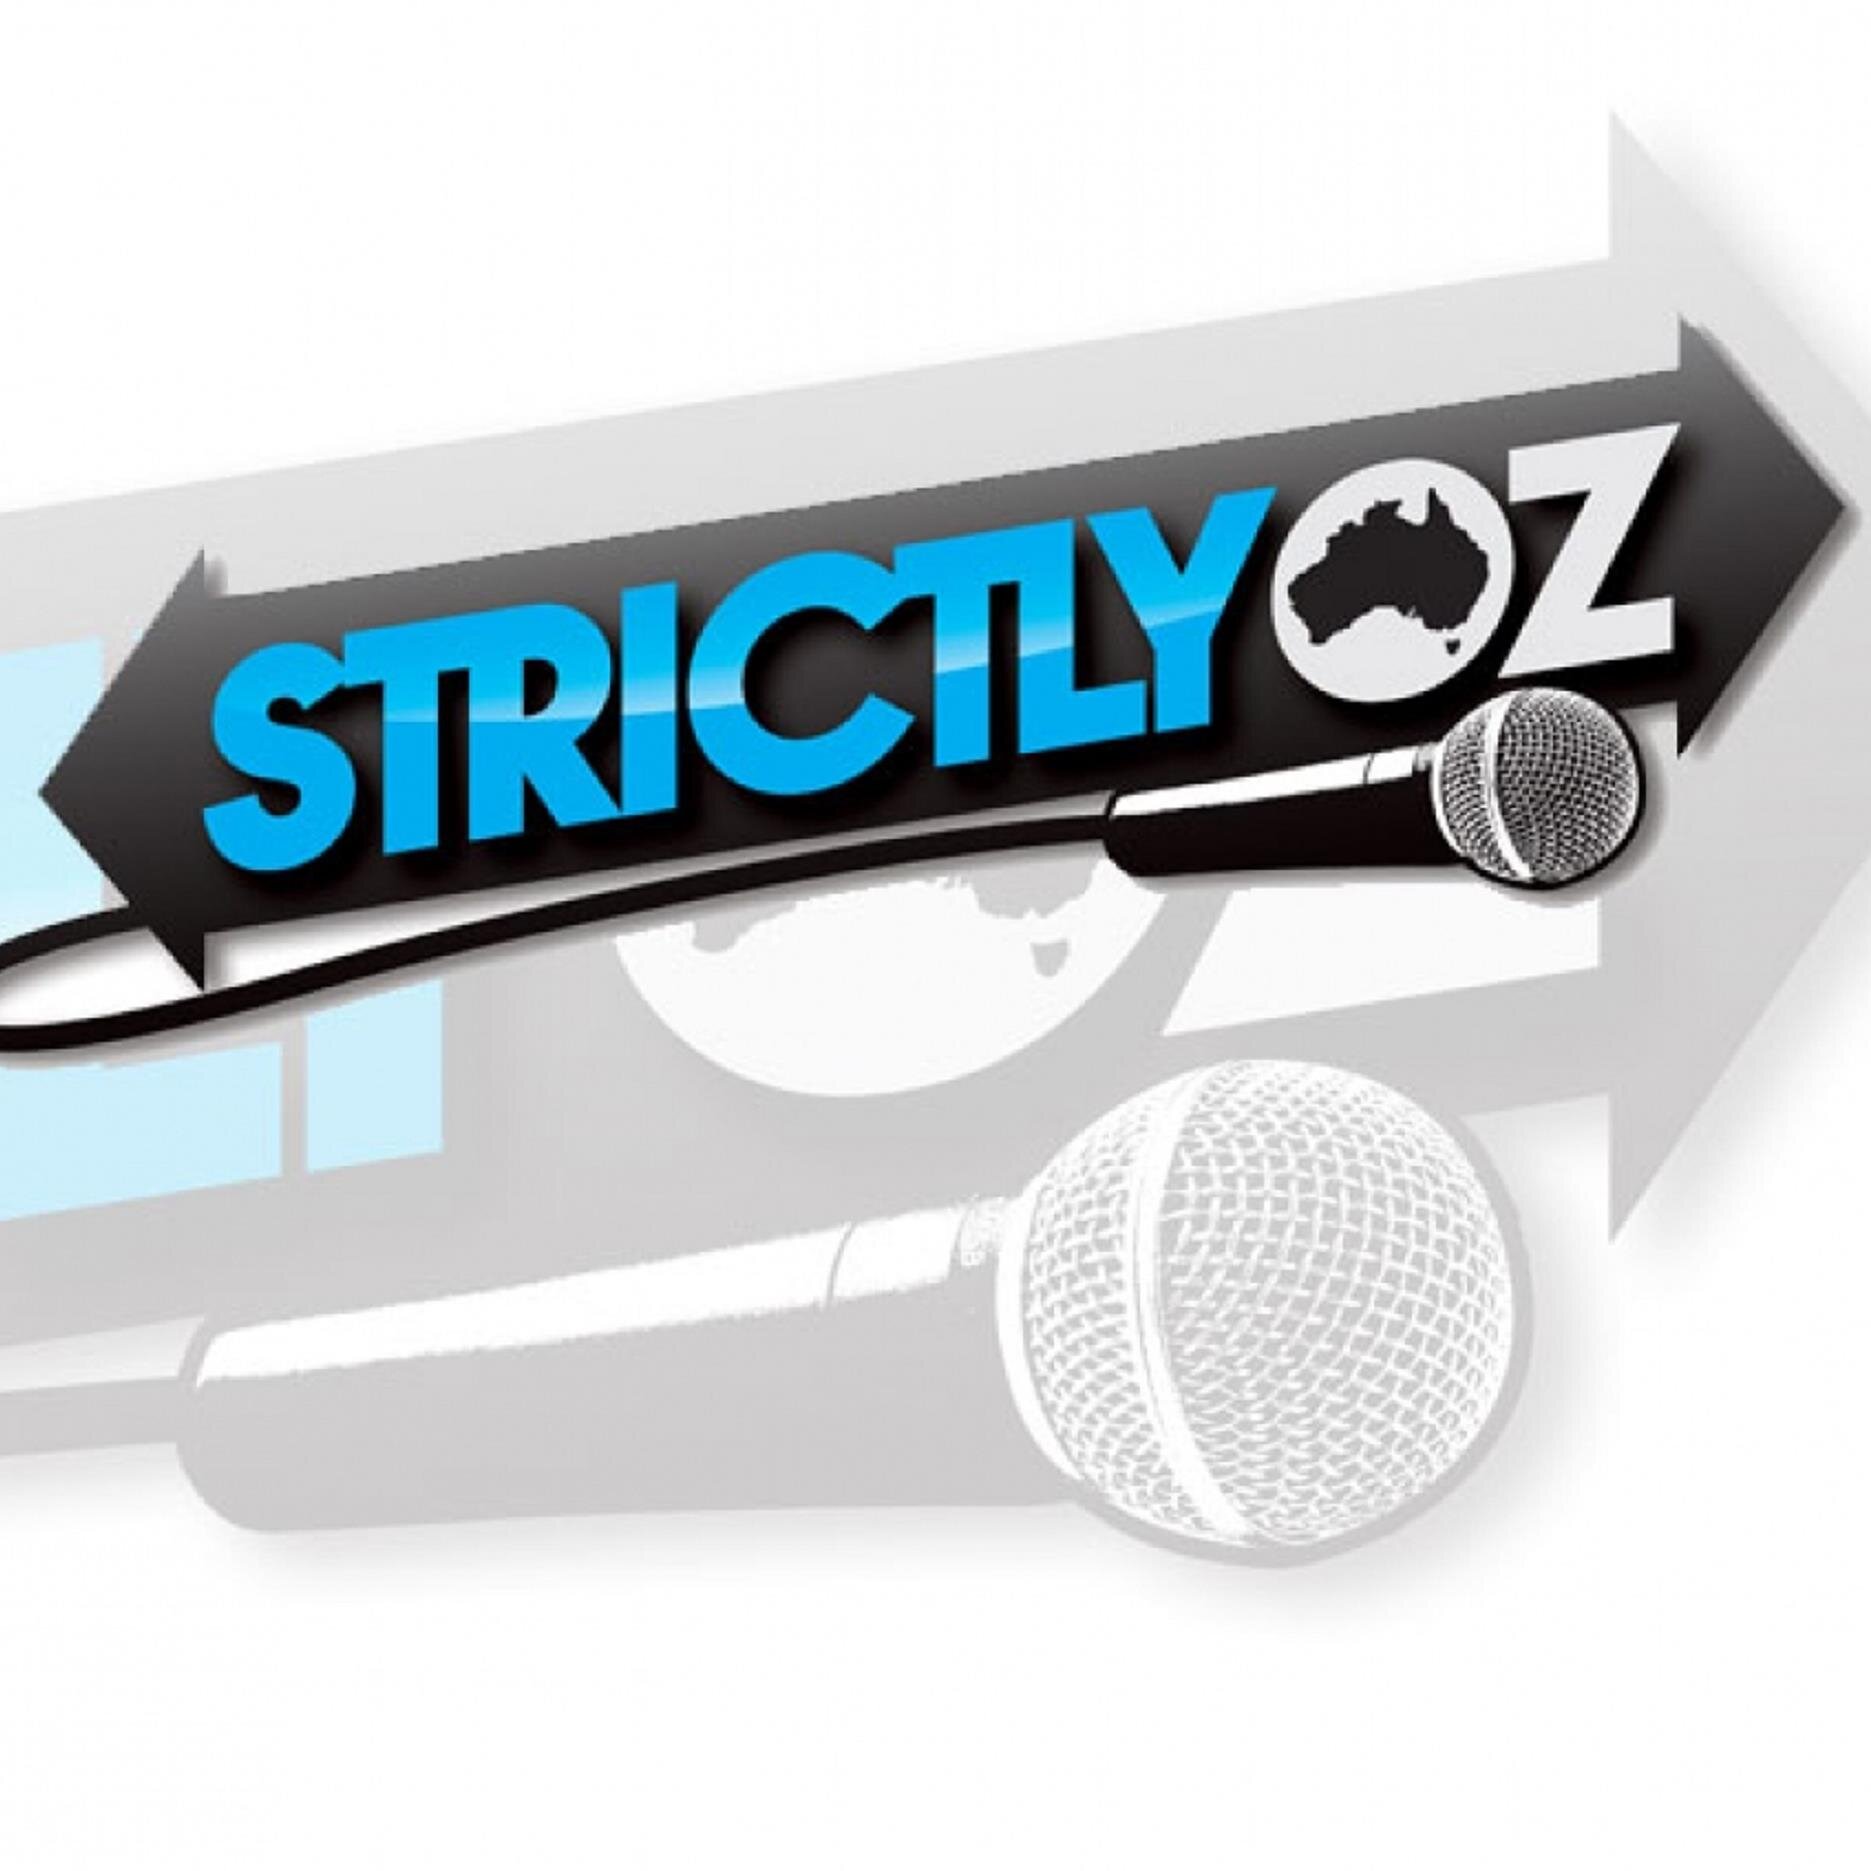 StrictlyOZ Profile Picture